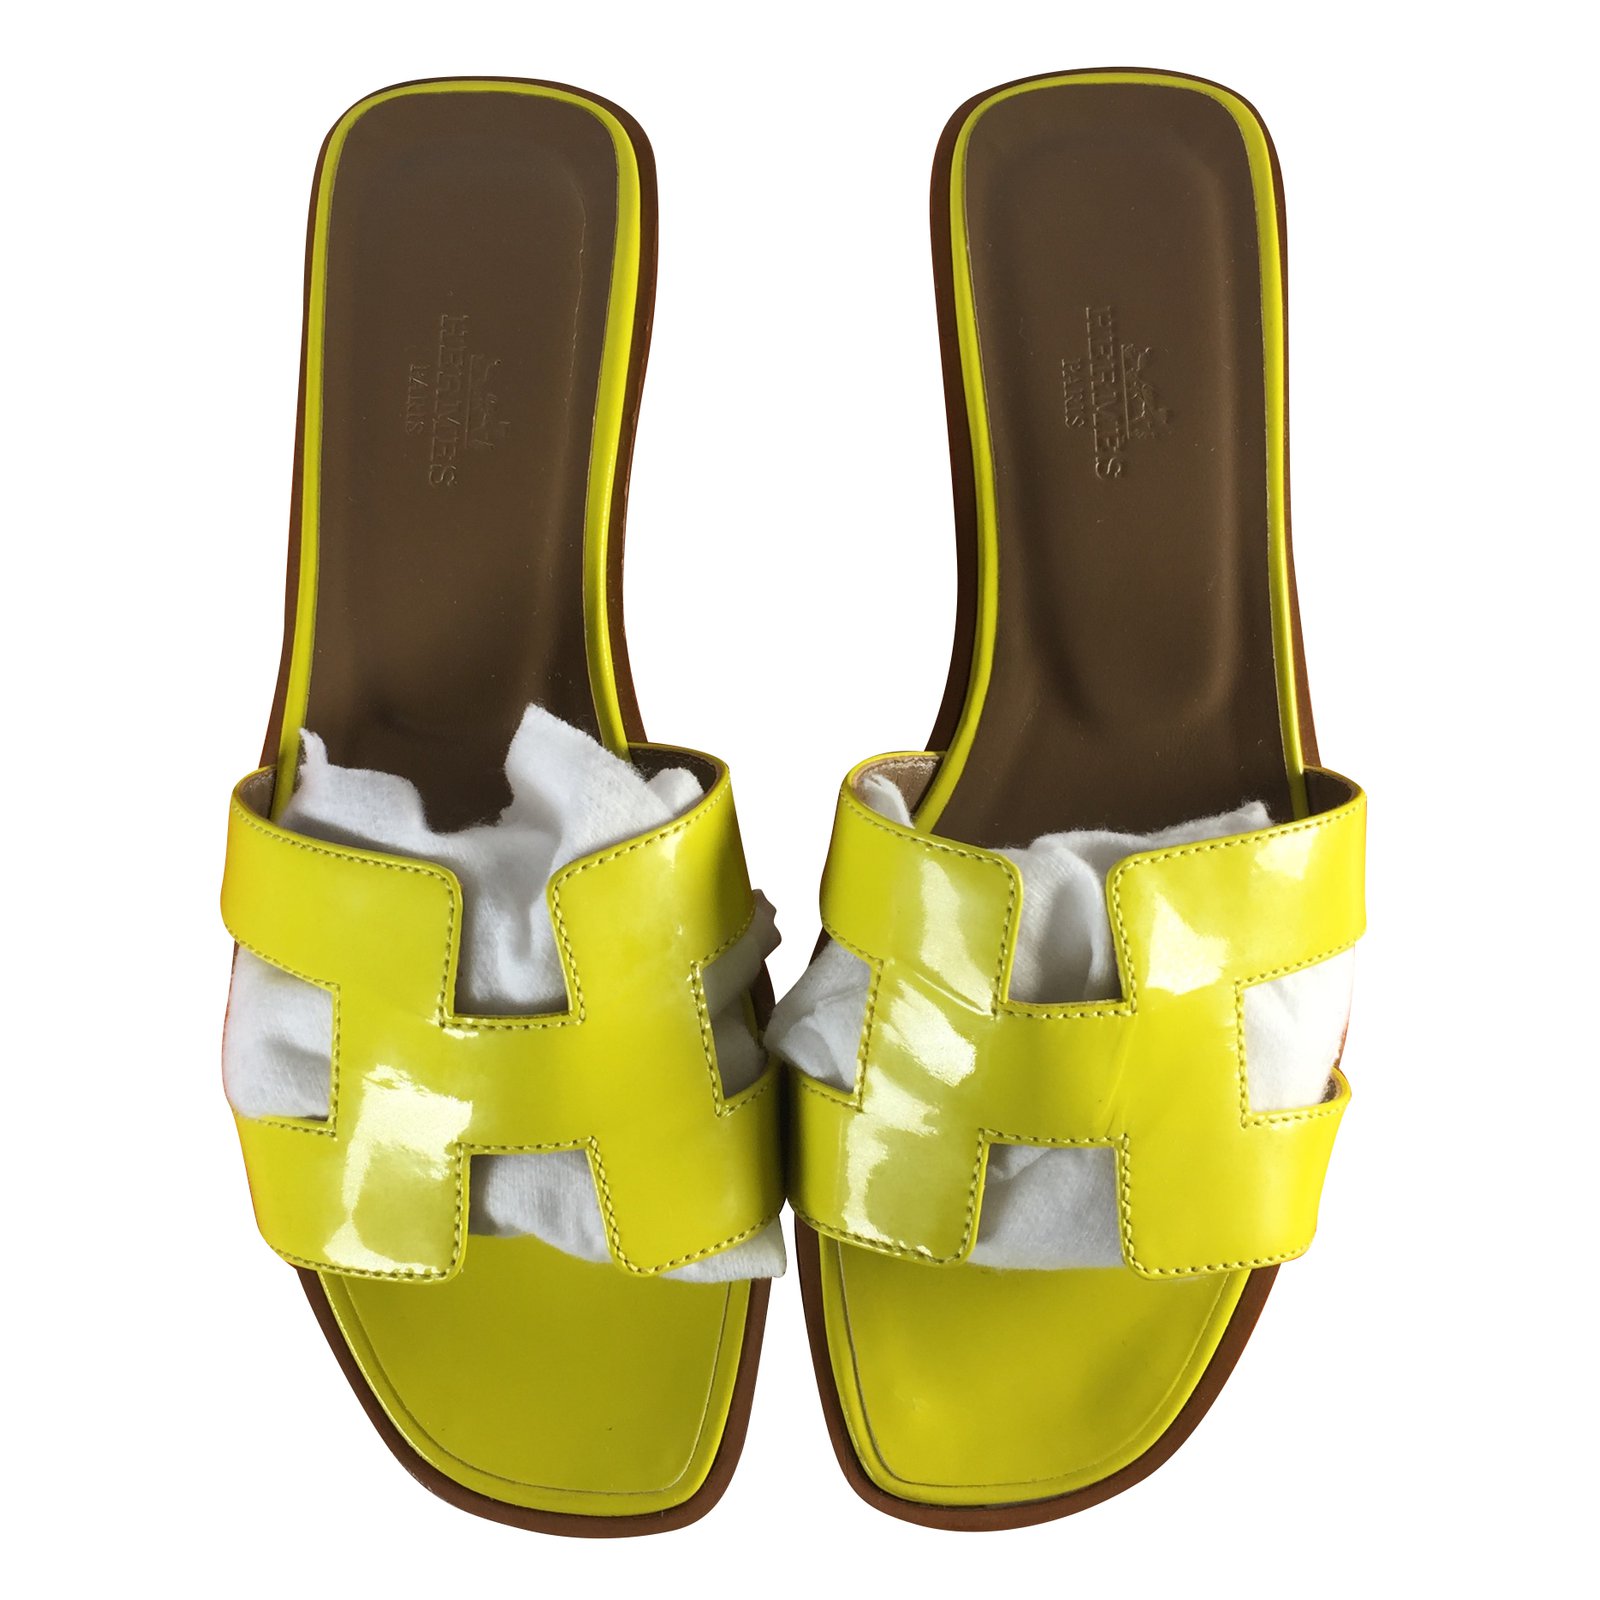 yellow hermes slippers